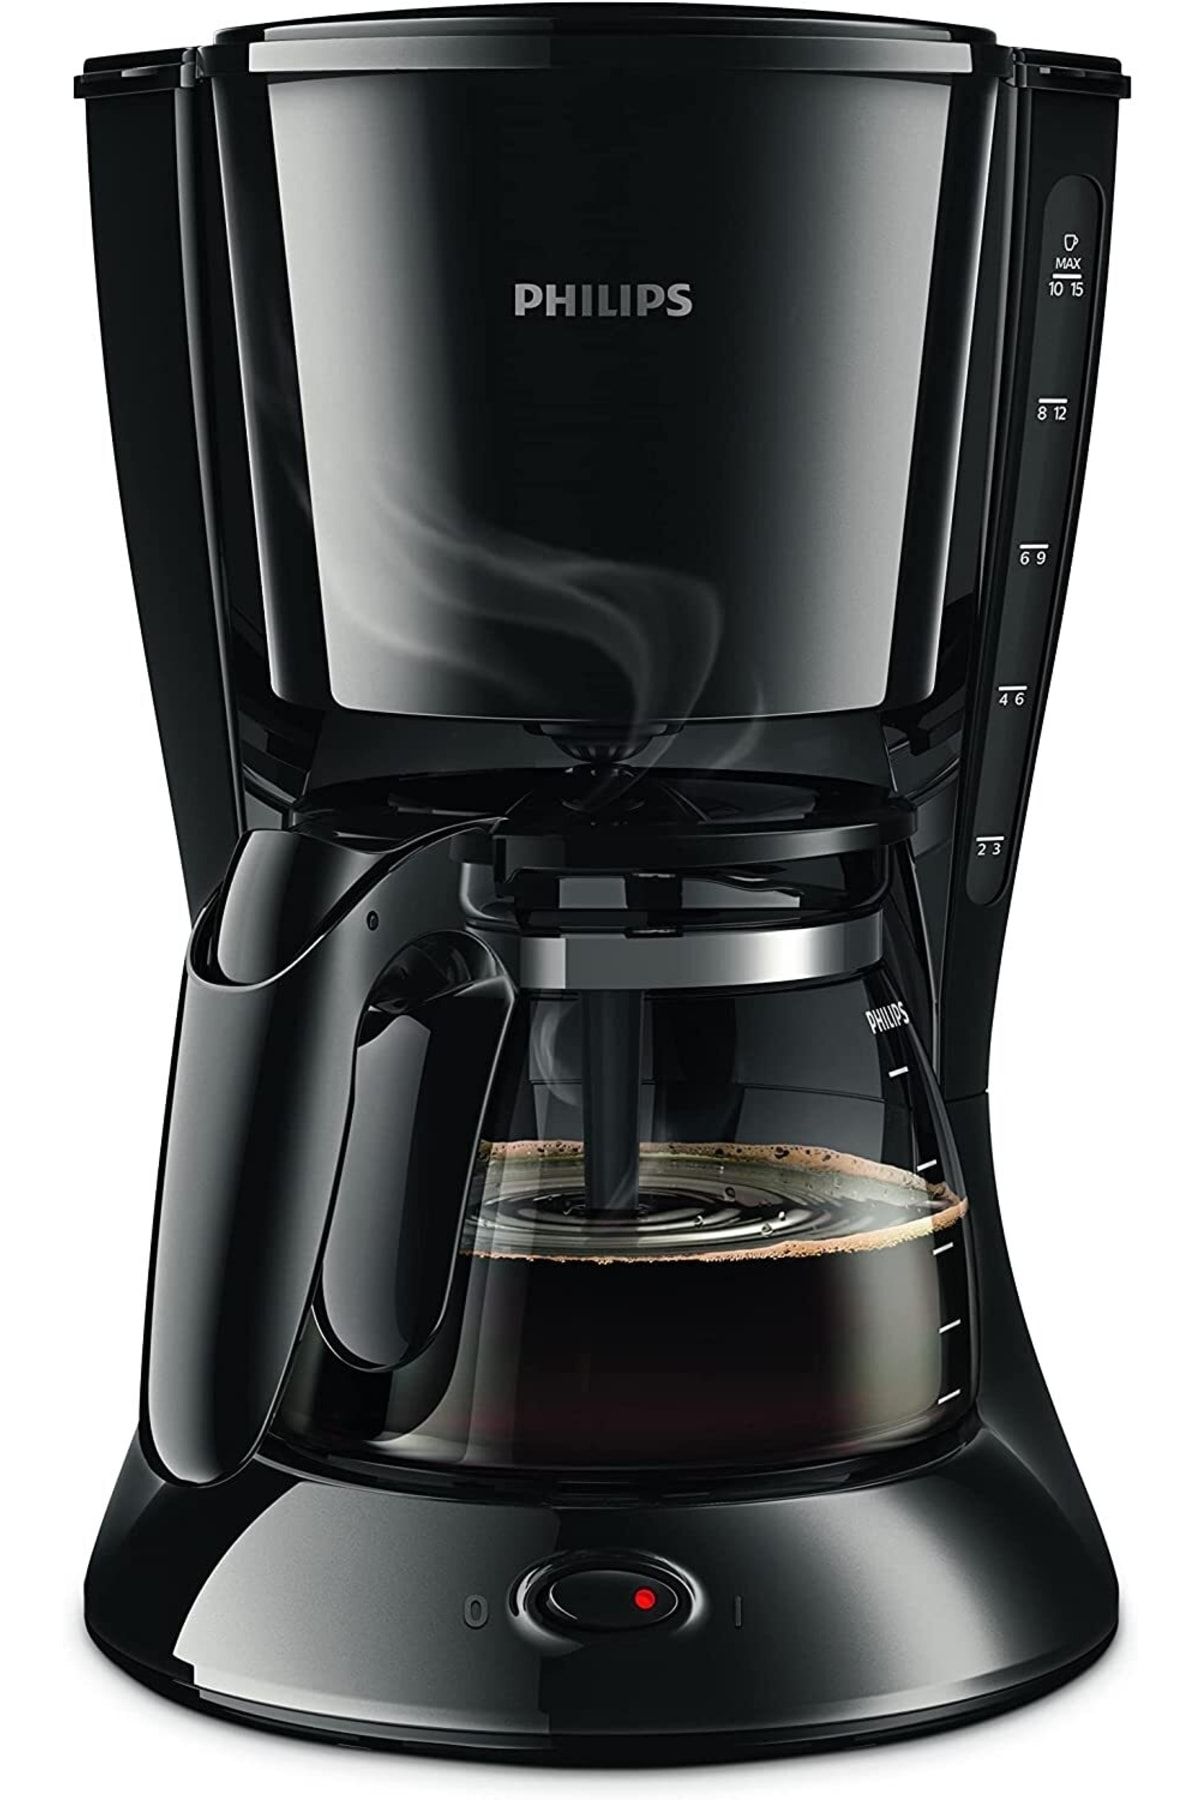 Philips Kahve Makinesi, 1.2 L Cam Sürahili, Makinede Yıkanabilir, 1000 W, Siyah